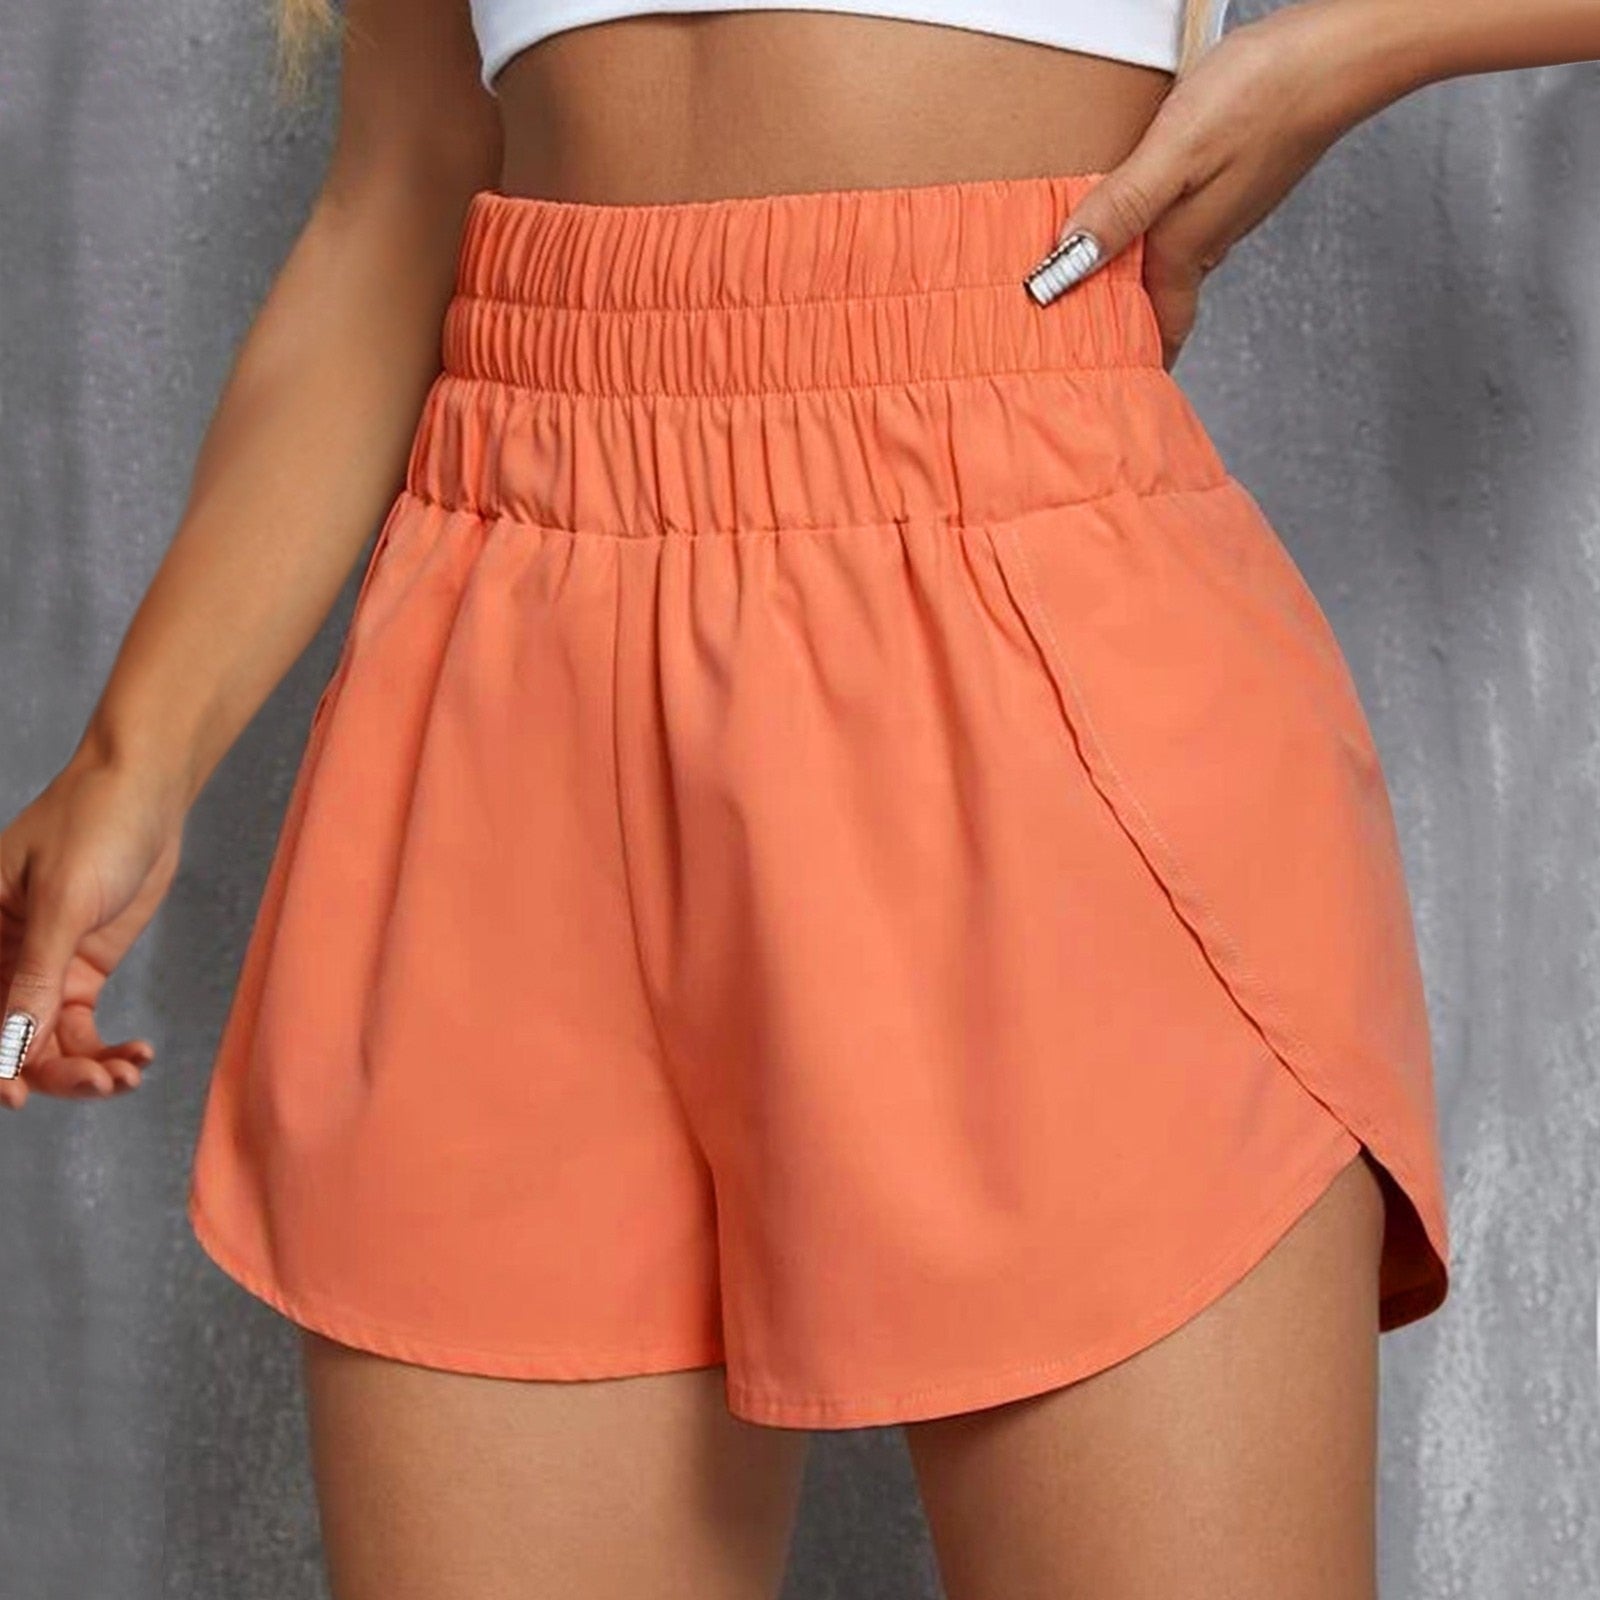 Zelos Women's Black & Orange, Drawstring Athletic Shorts. Size Medium. -  $26 (25% Off Retail) - From Jen